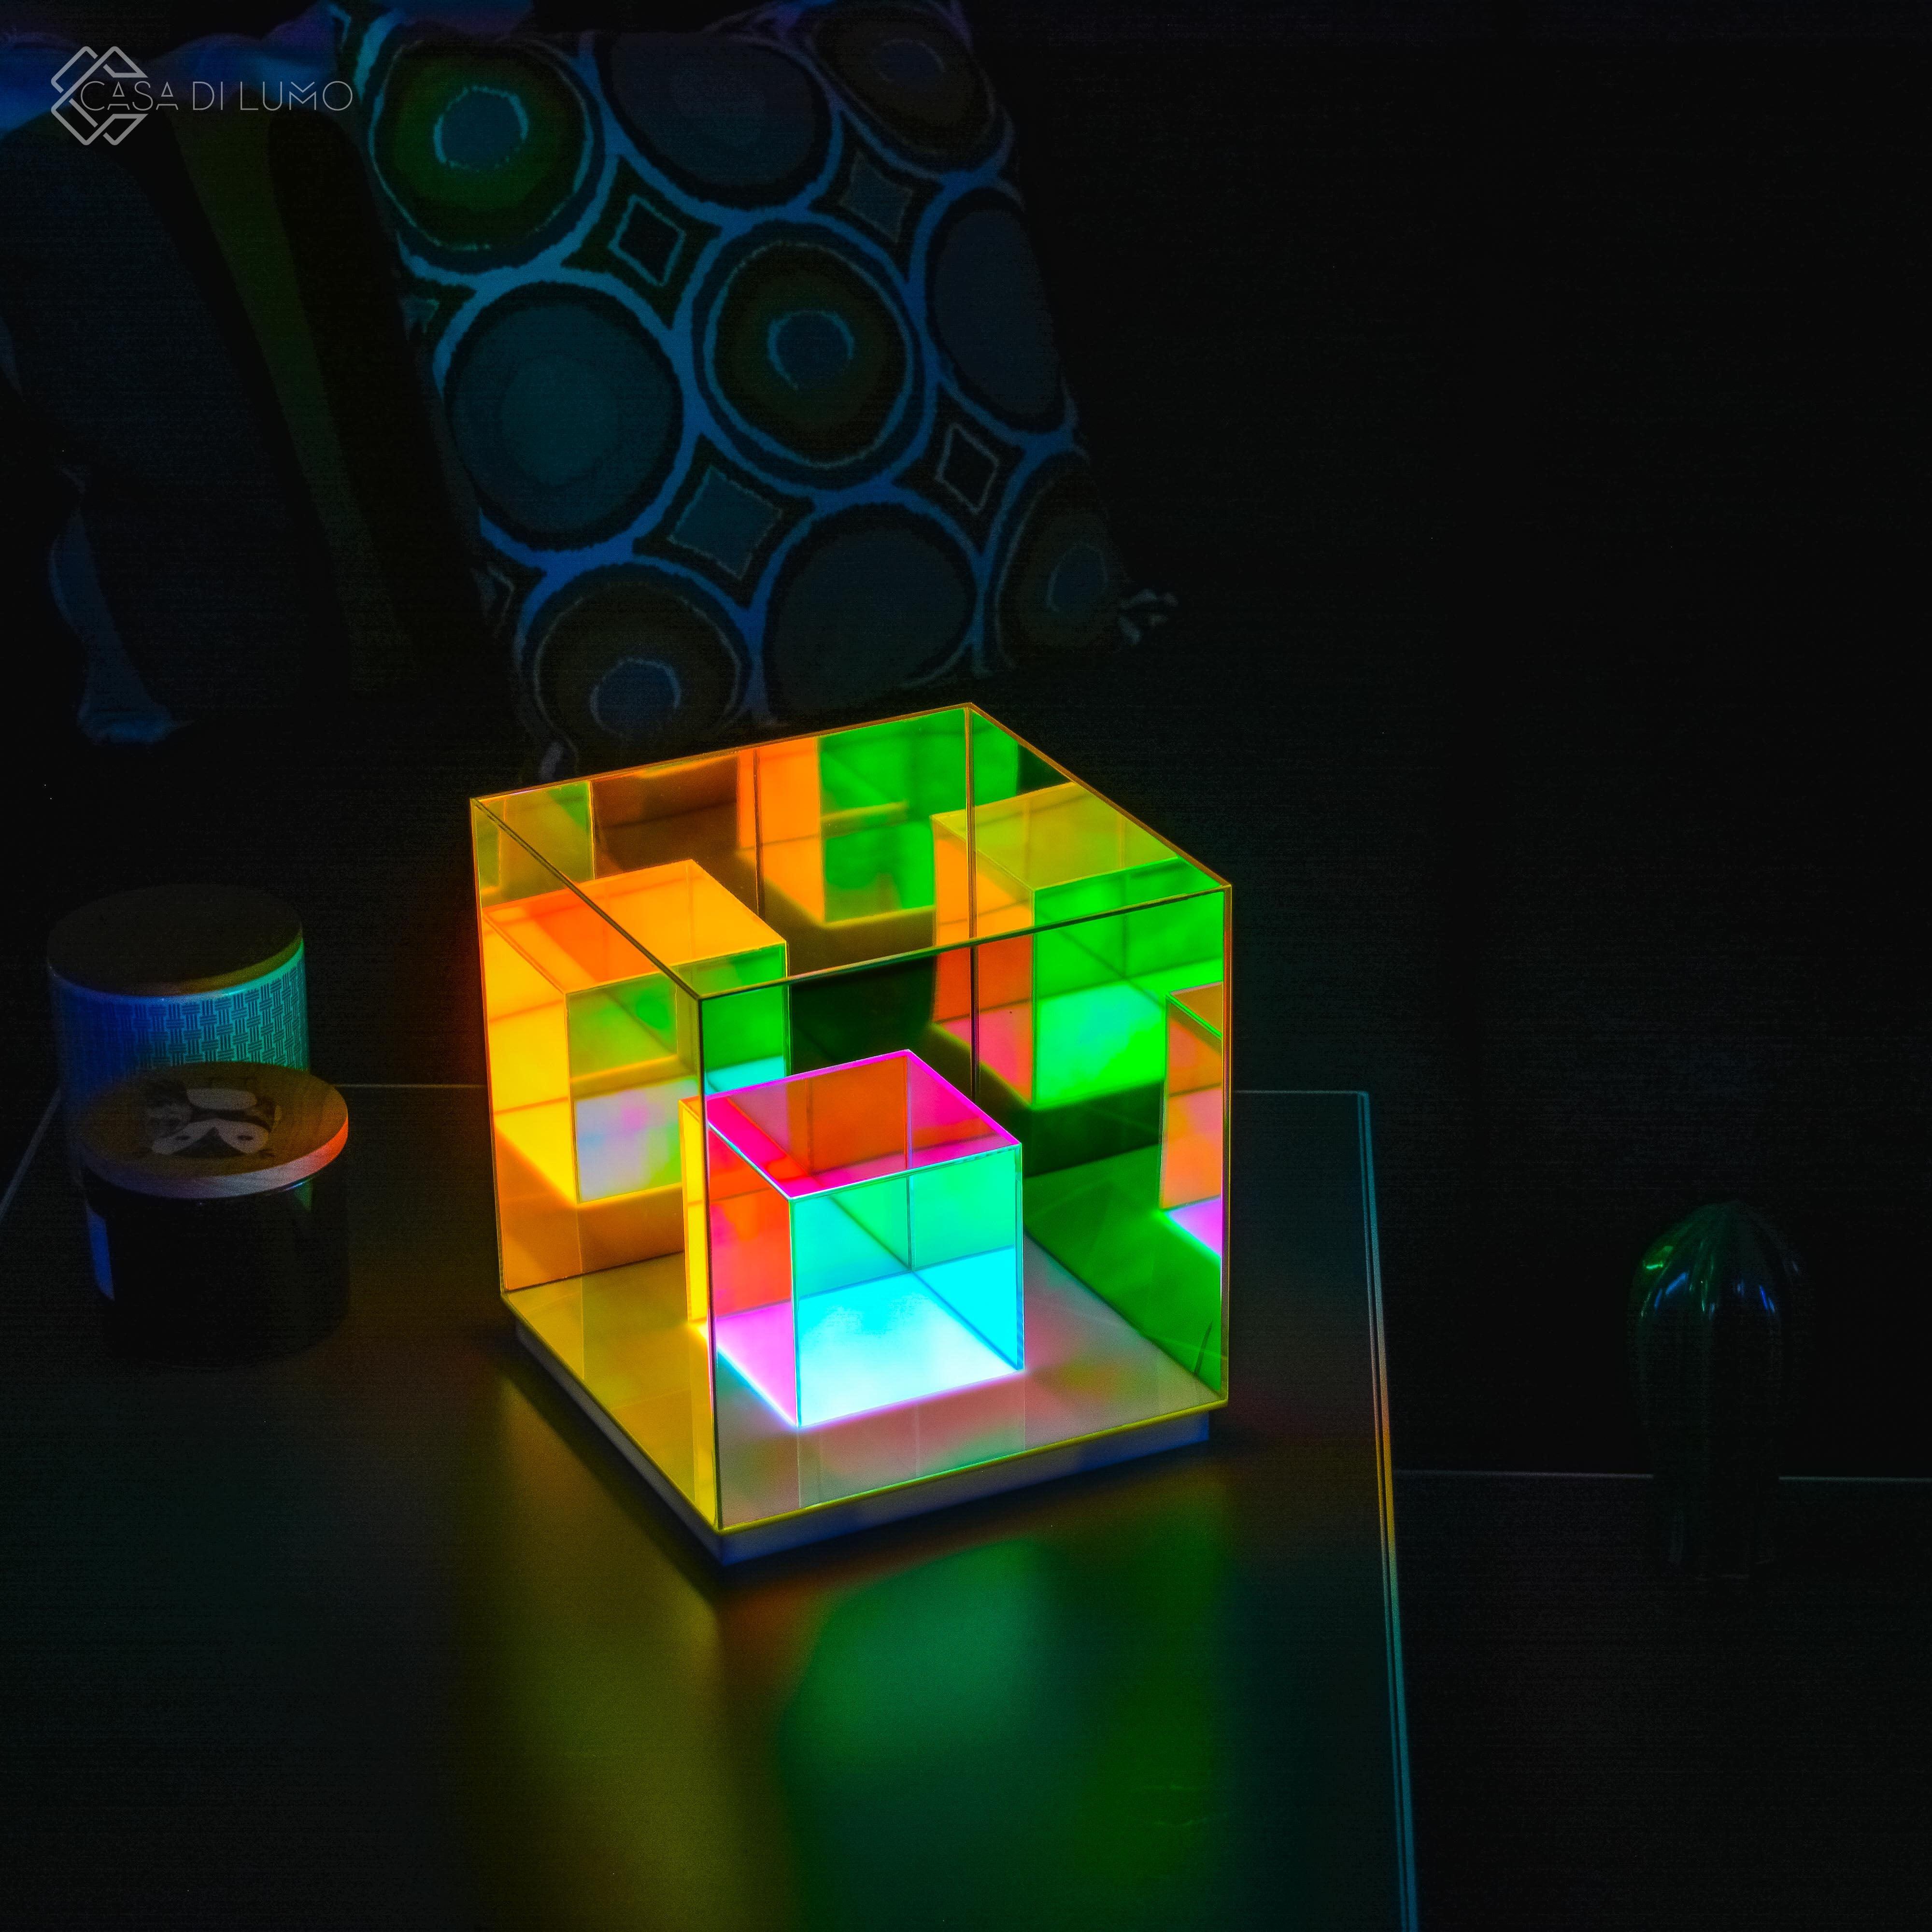 Infinity Cube - Casa Di Lumo